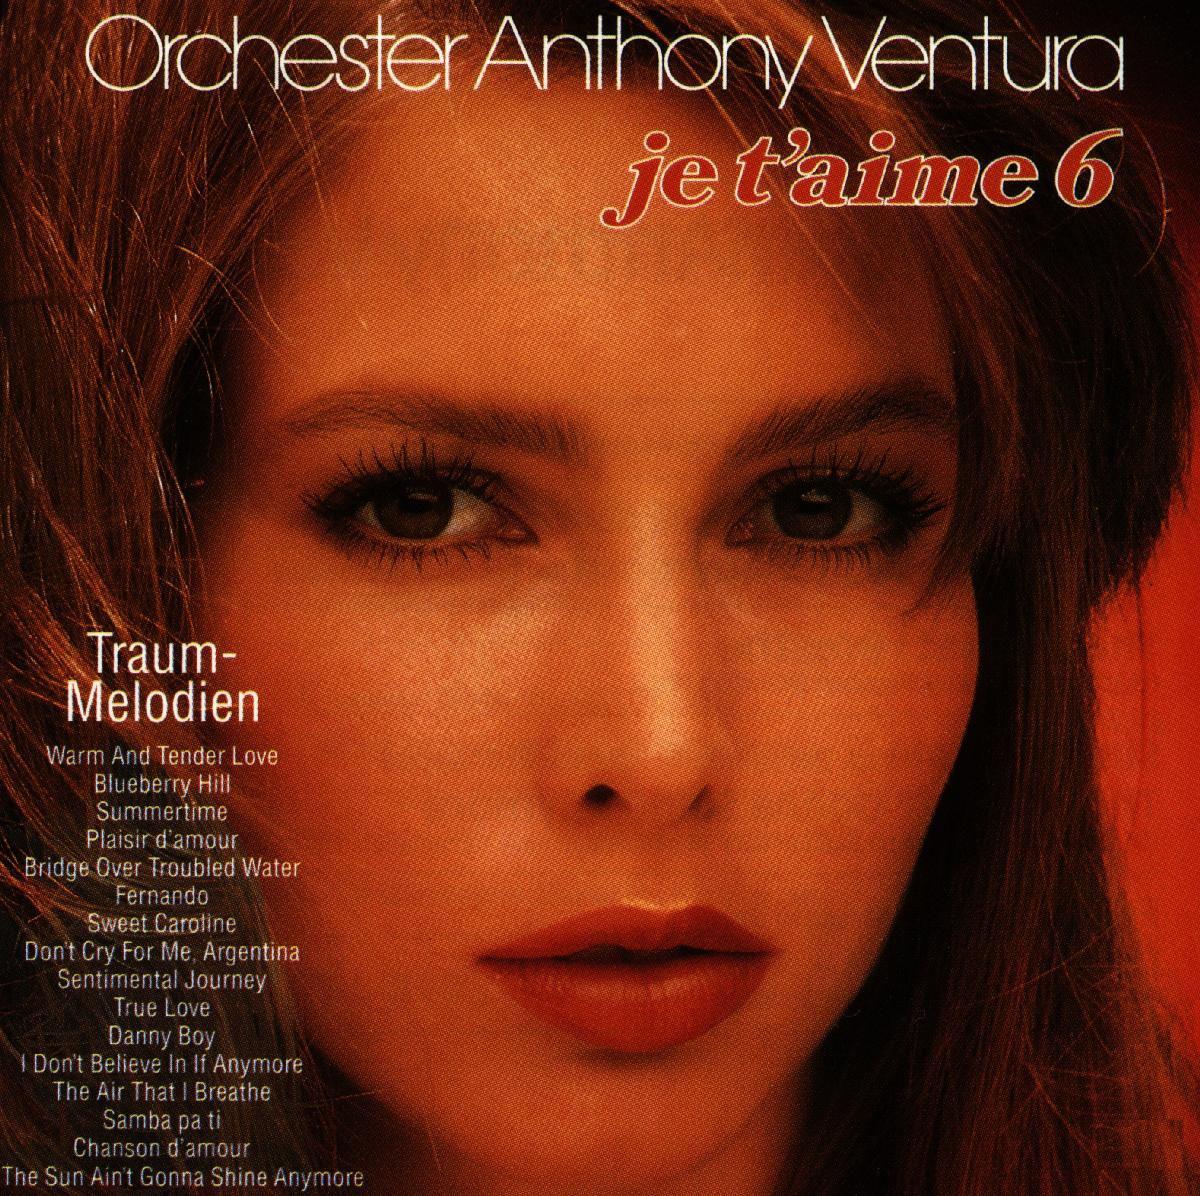 Anthony Ventura - True Love / Sentimental Journey